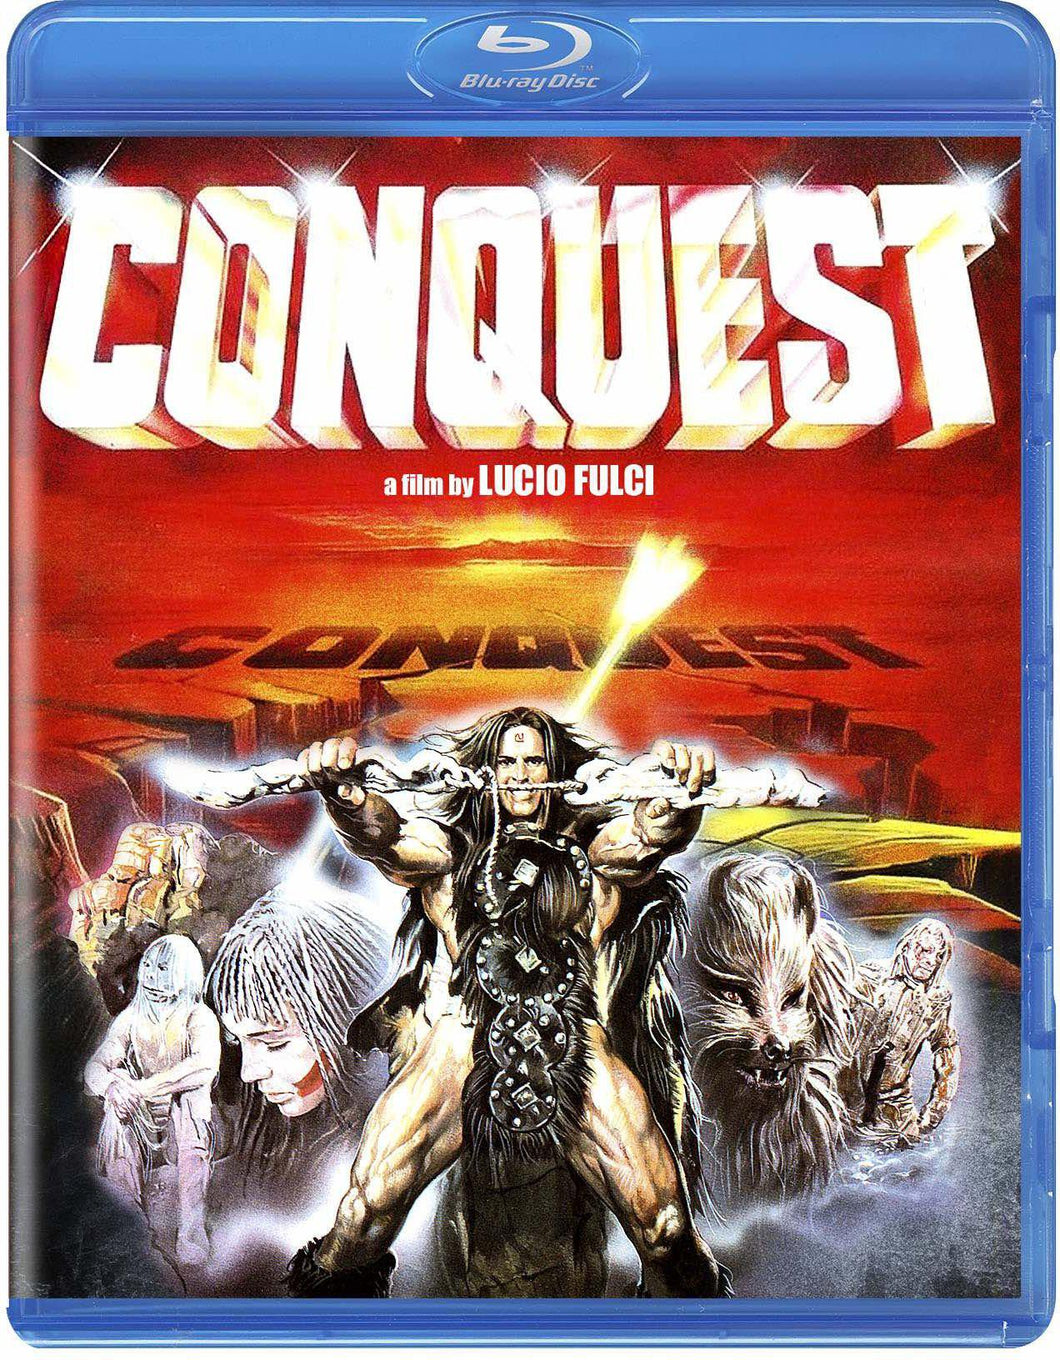 Conquest (Blu-ray): Ronin Flix